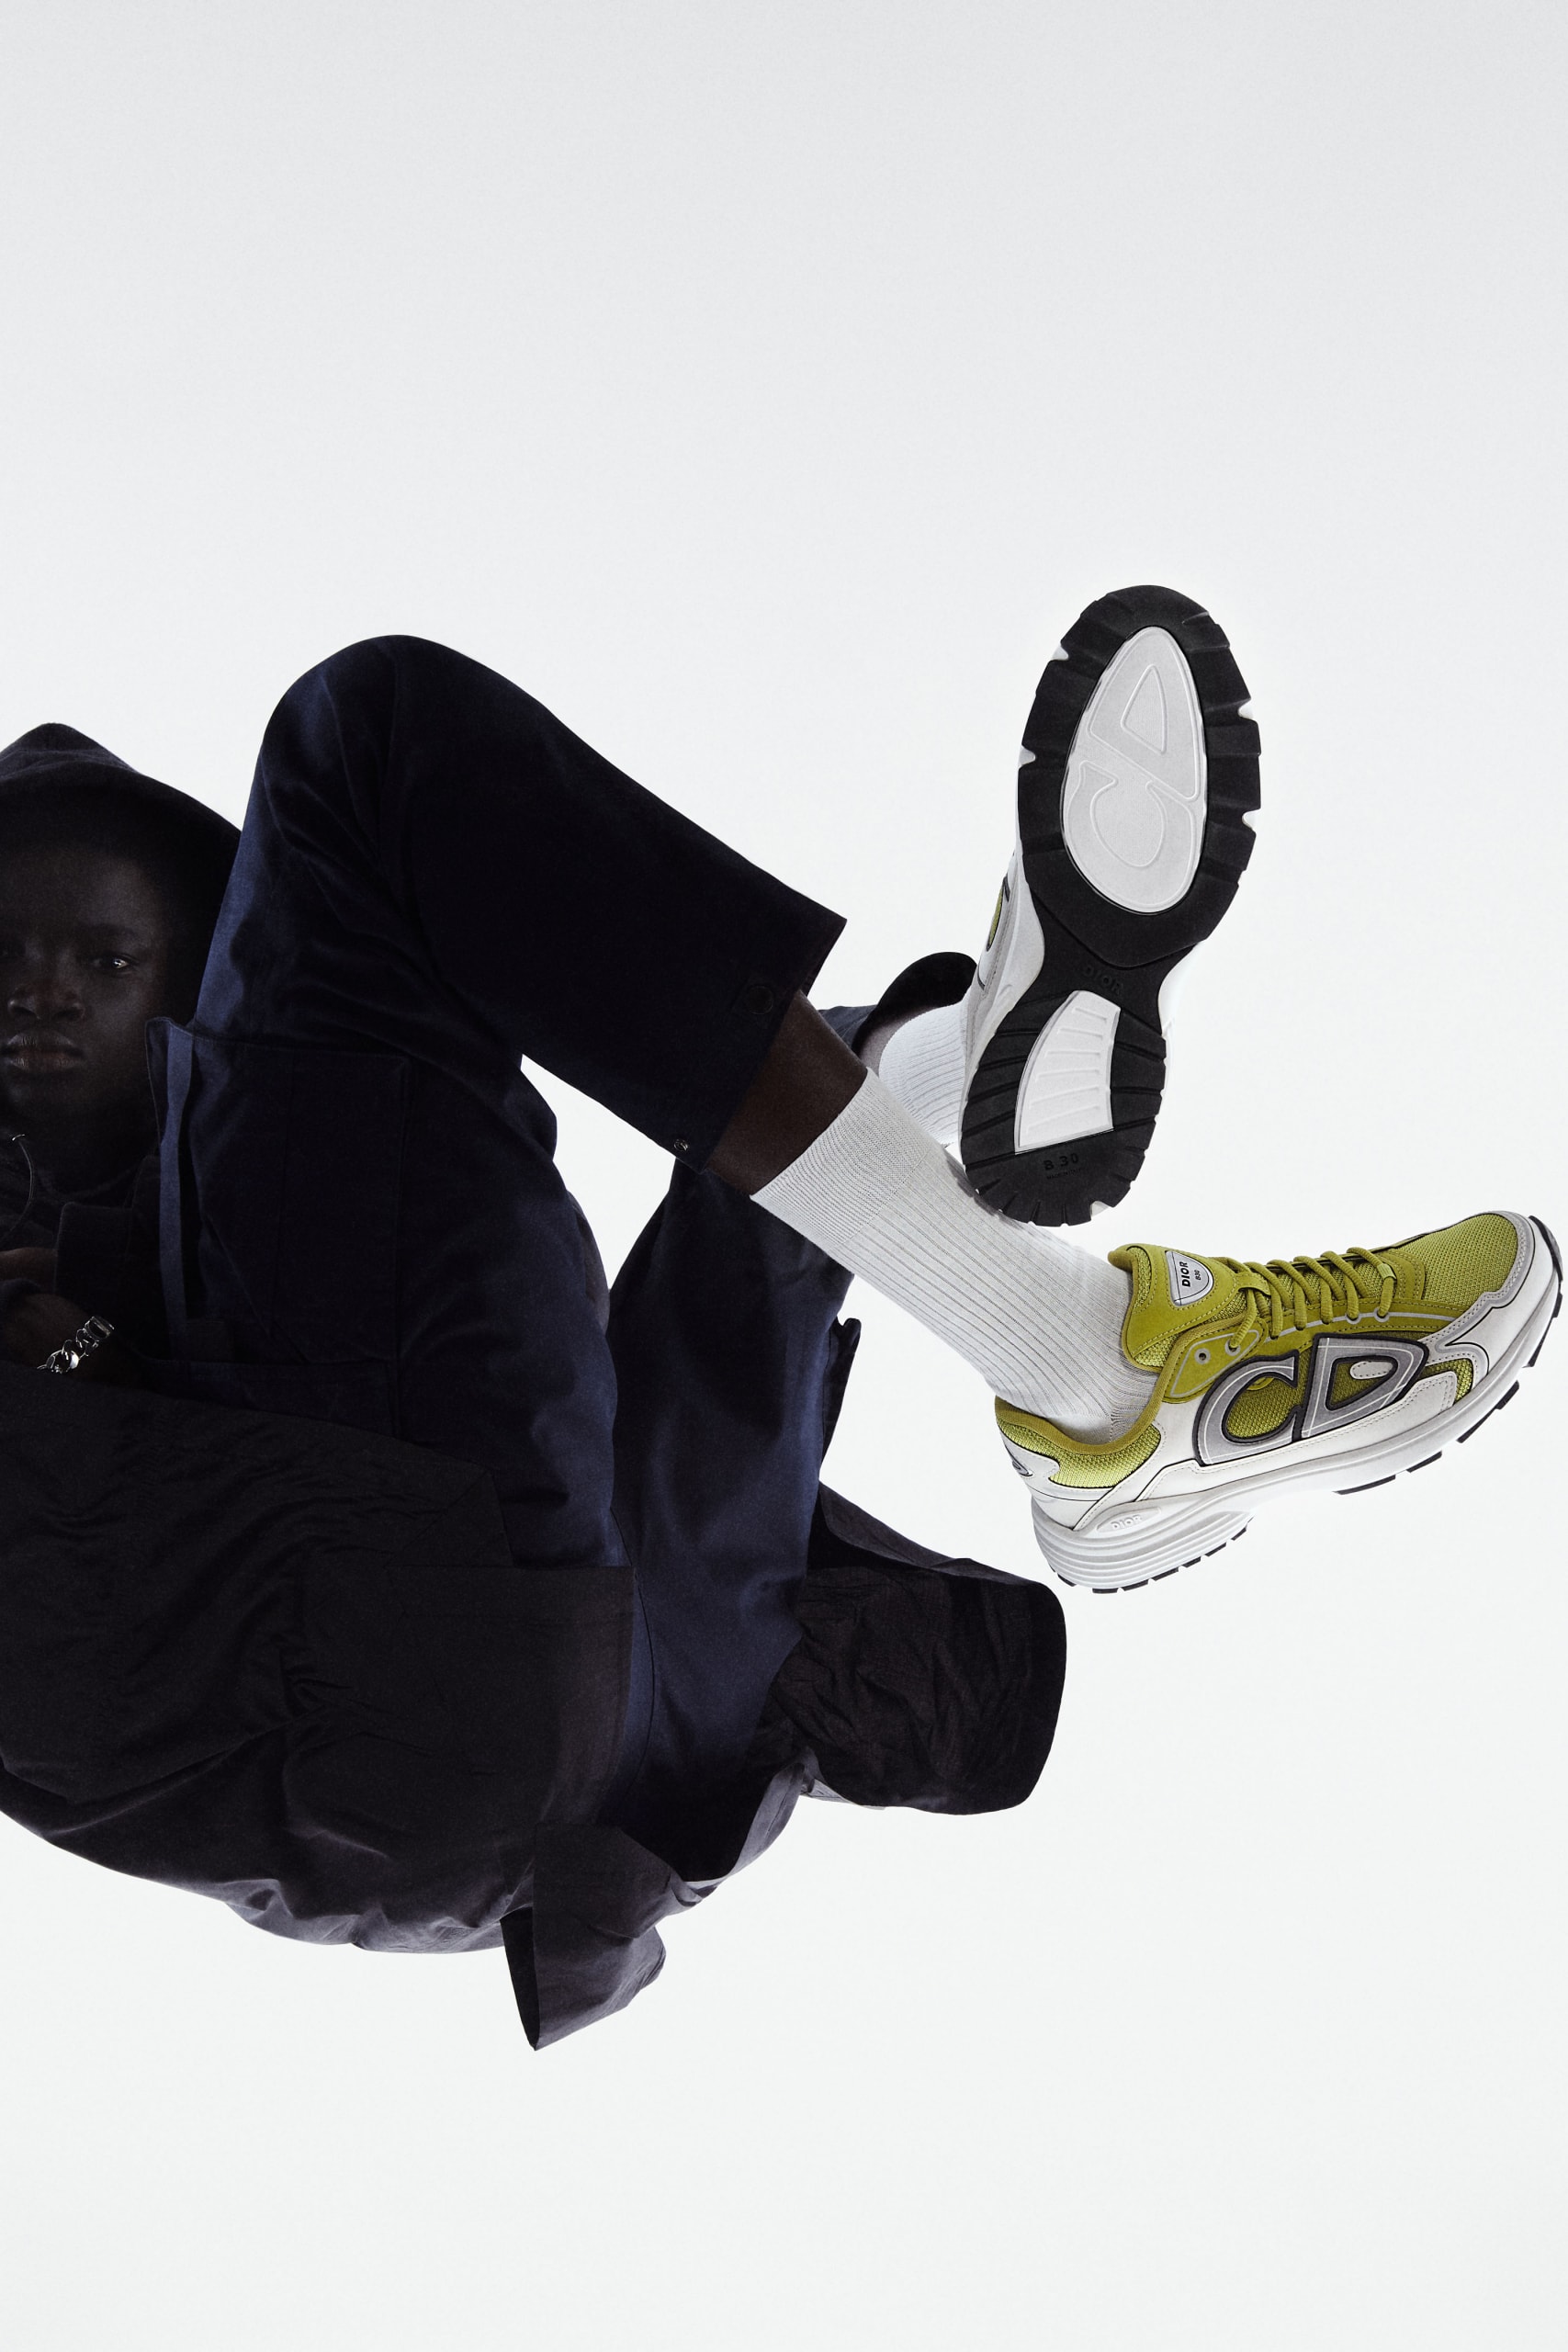 Dior 最新「Dad Shoes」風格鞋款 B30 正式發佈